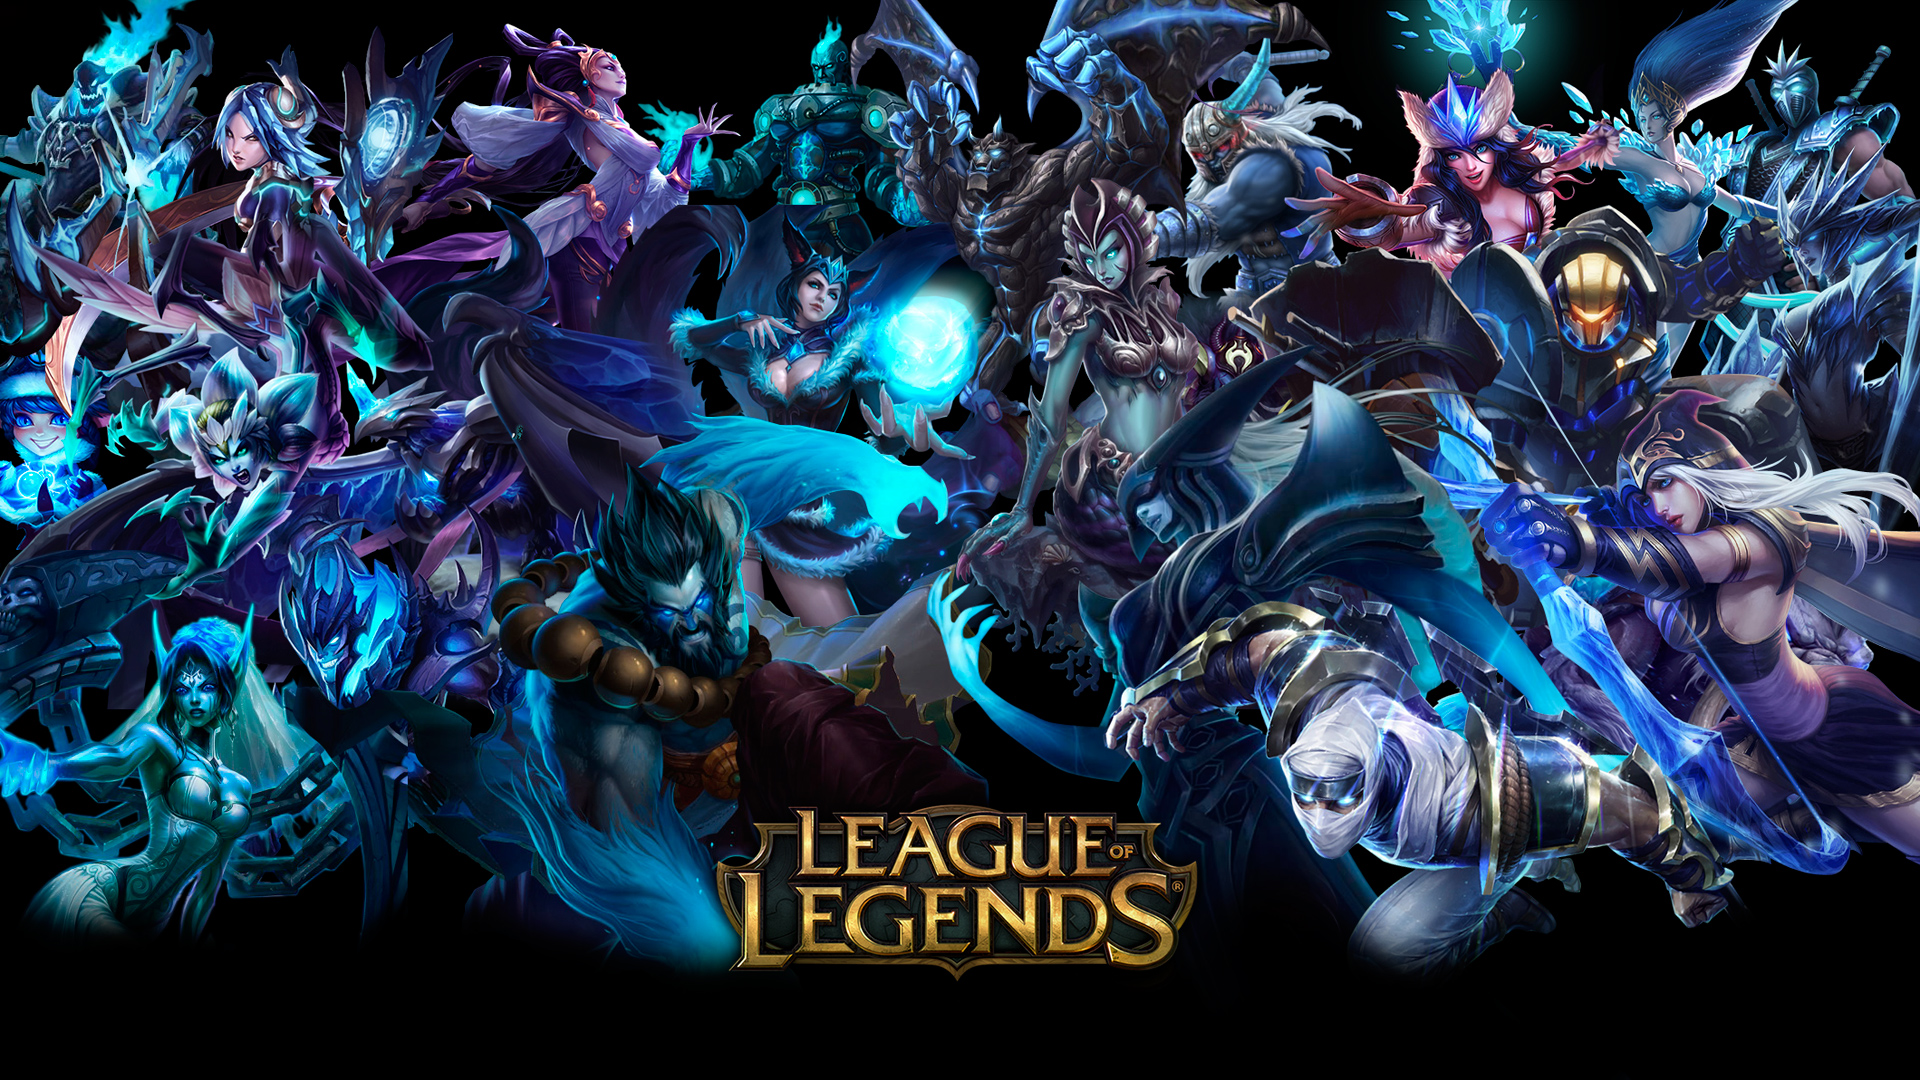 League of legend wallpaper